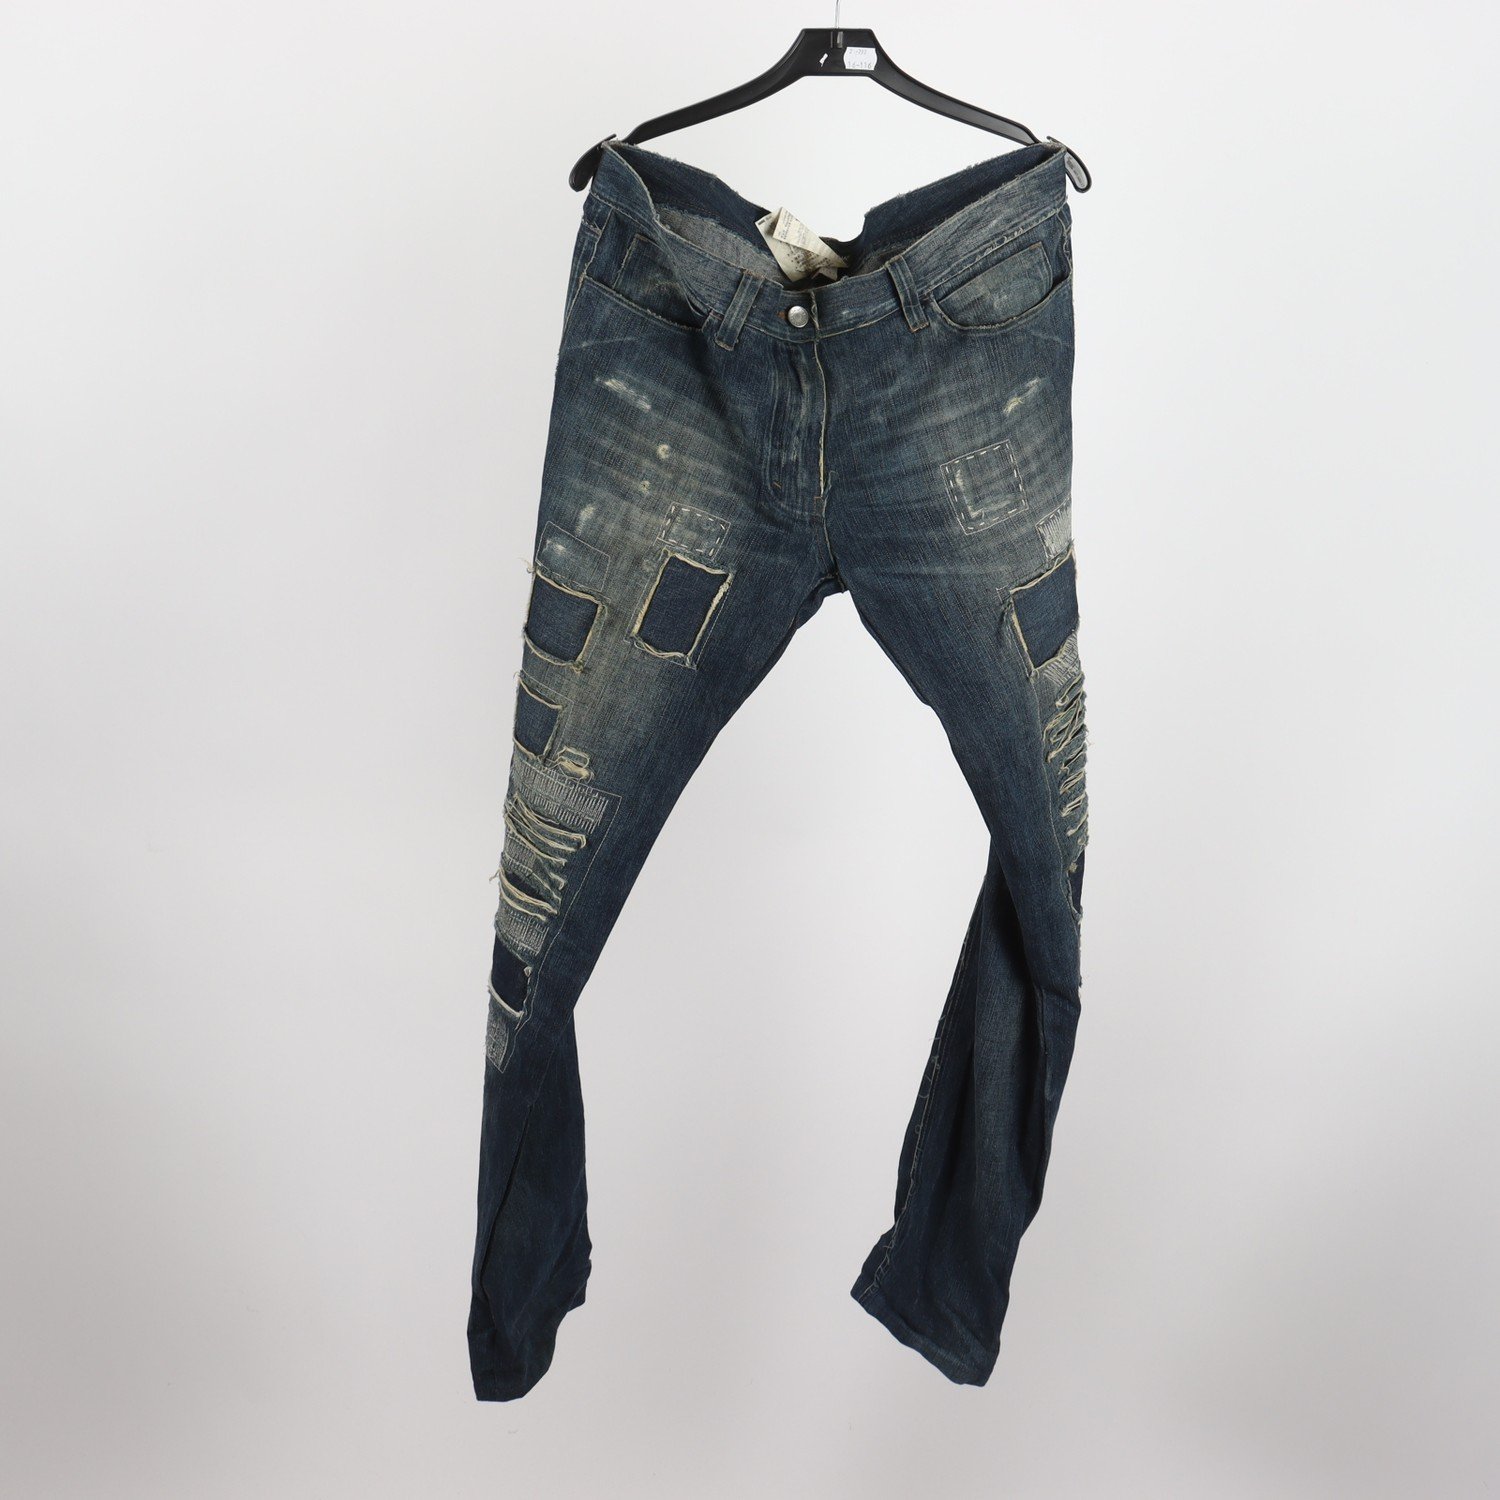 Jeans, Dolce & Gabbana, vintage, stl. 34/34